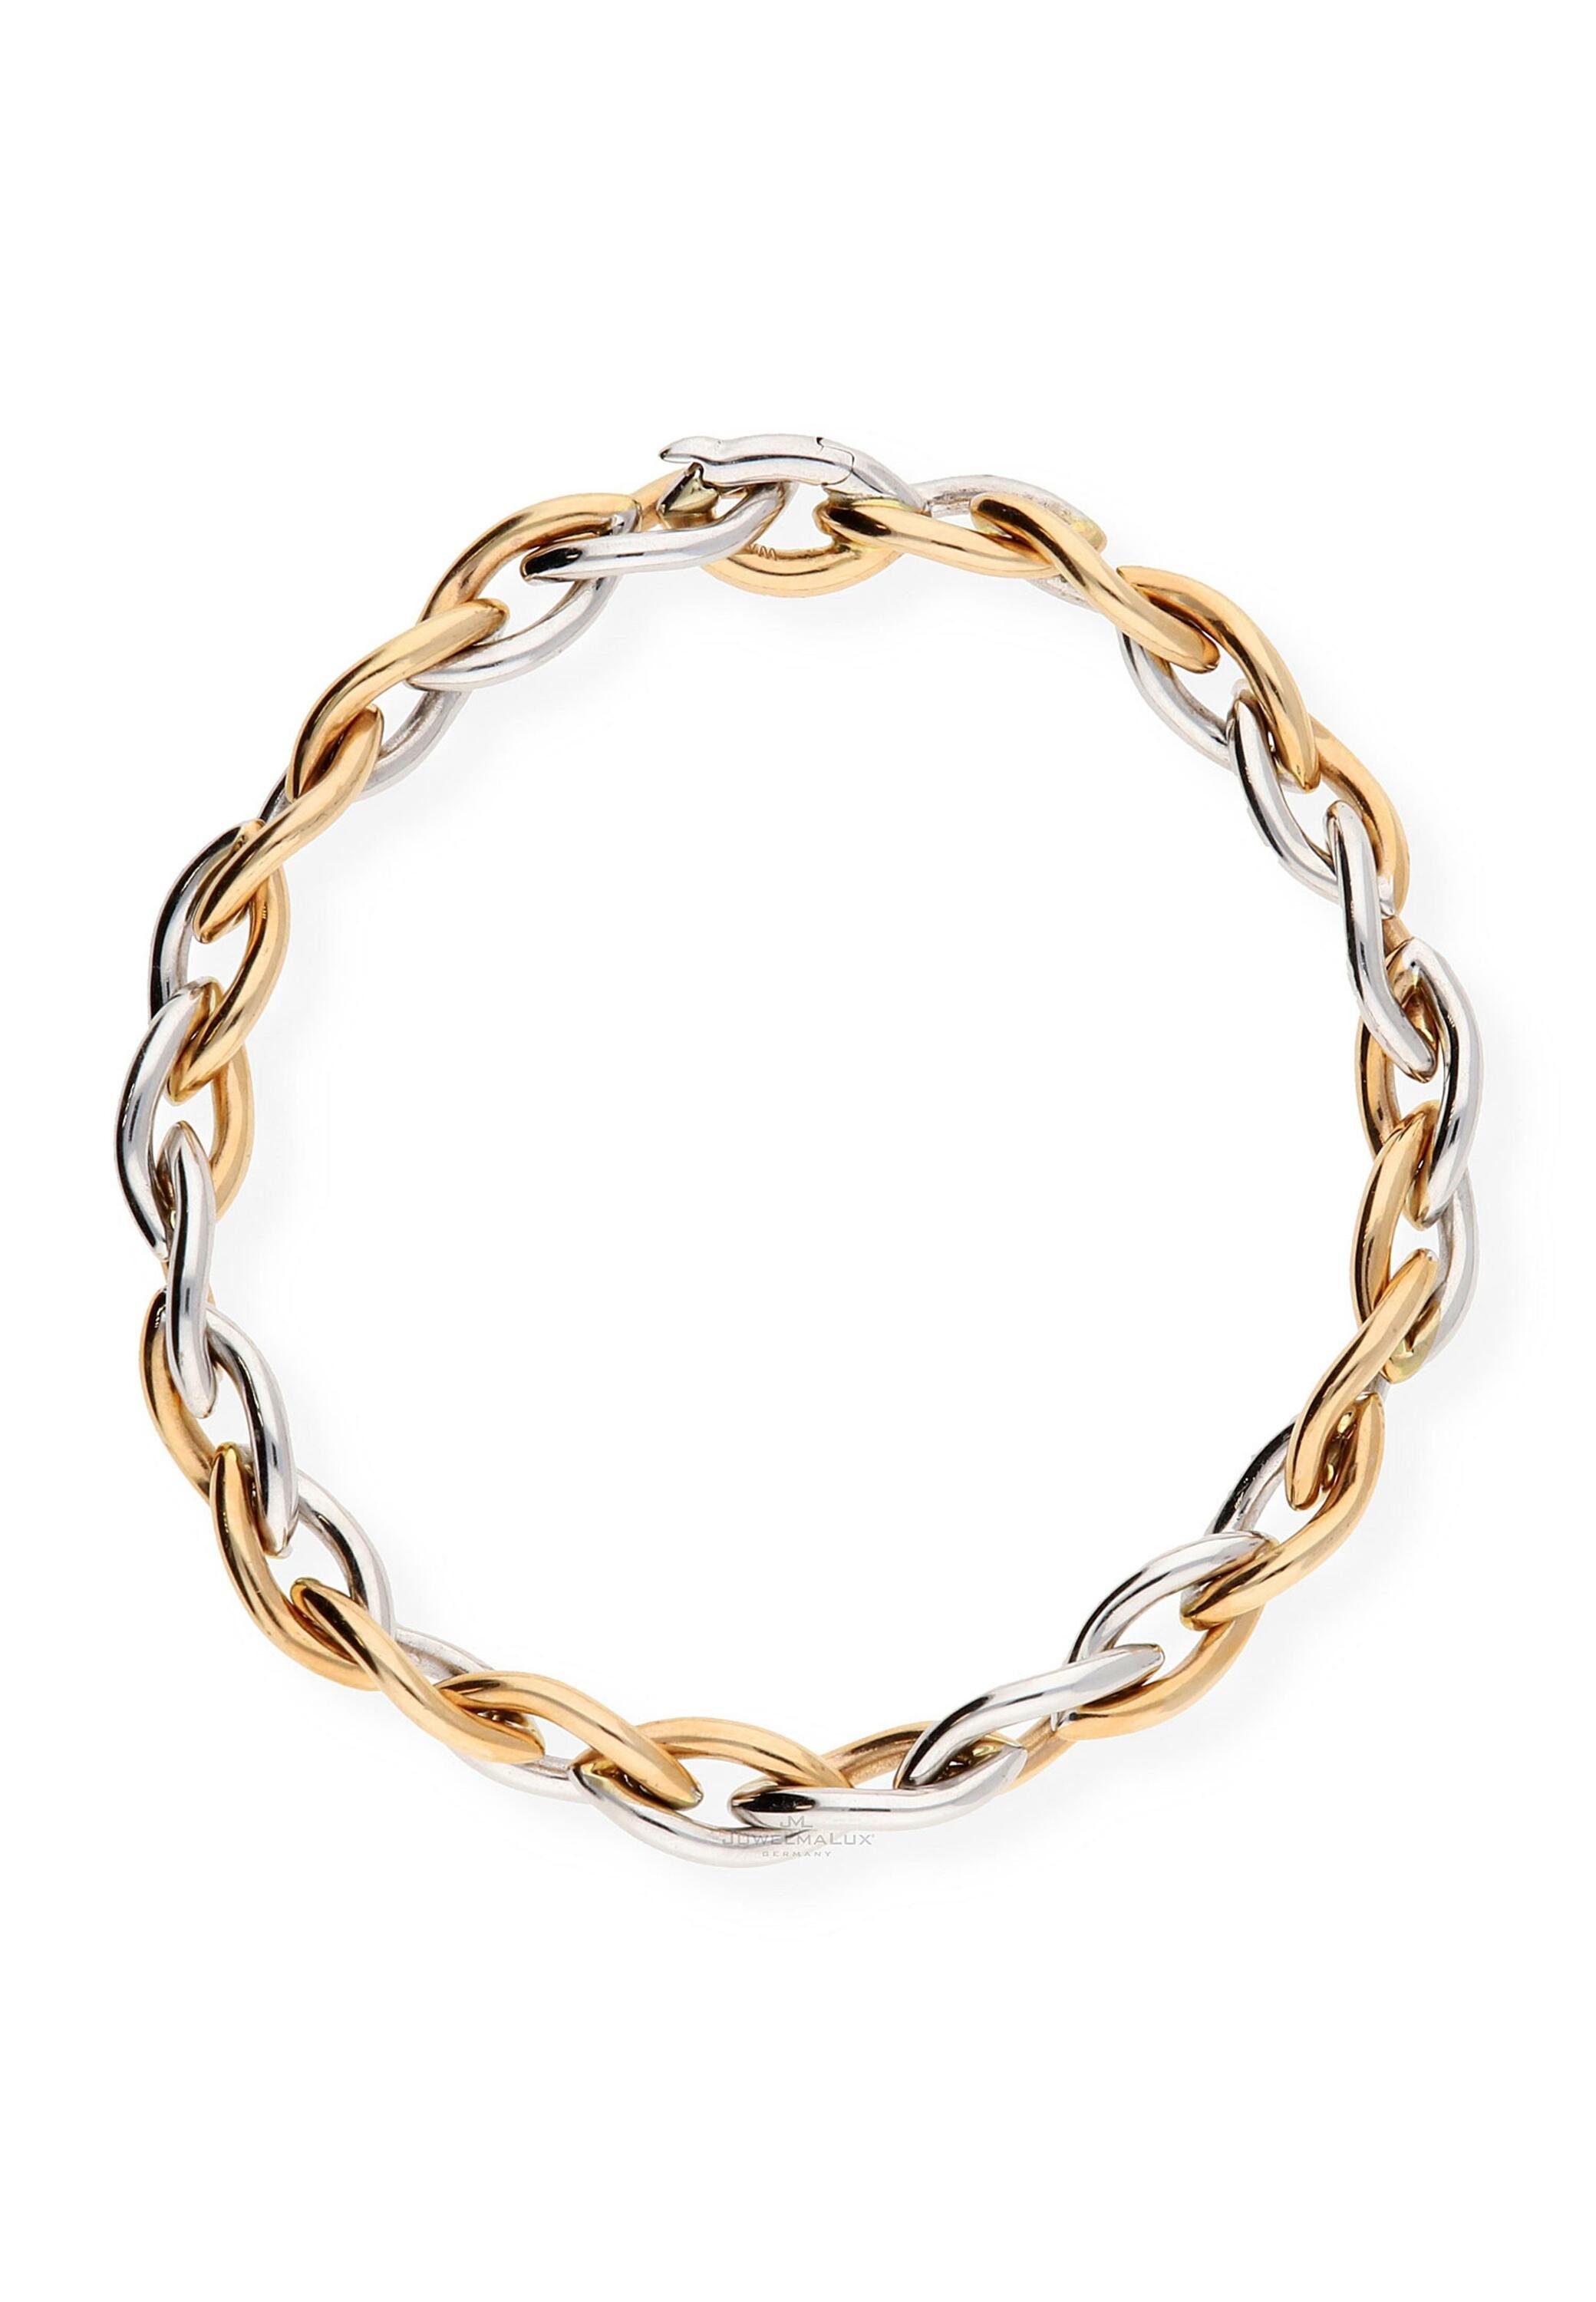 JuwelmaLux Goldarmband Armband 750/000 (18 Karat) Weißgold und Rotgold